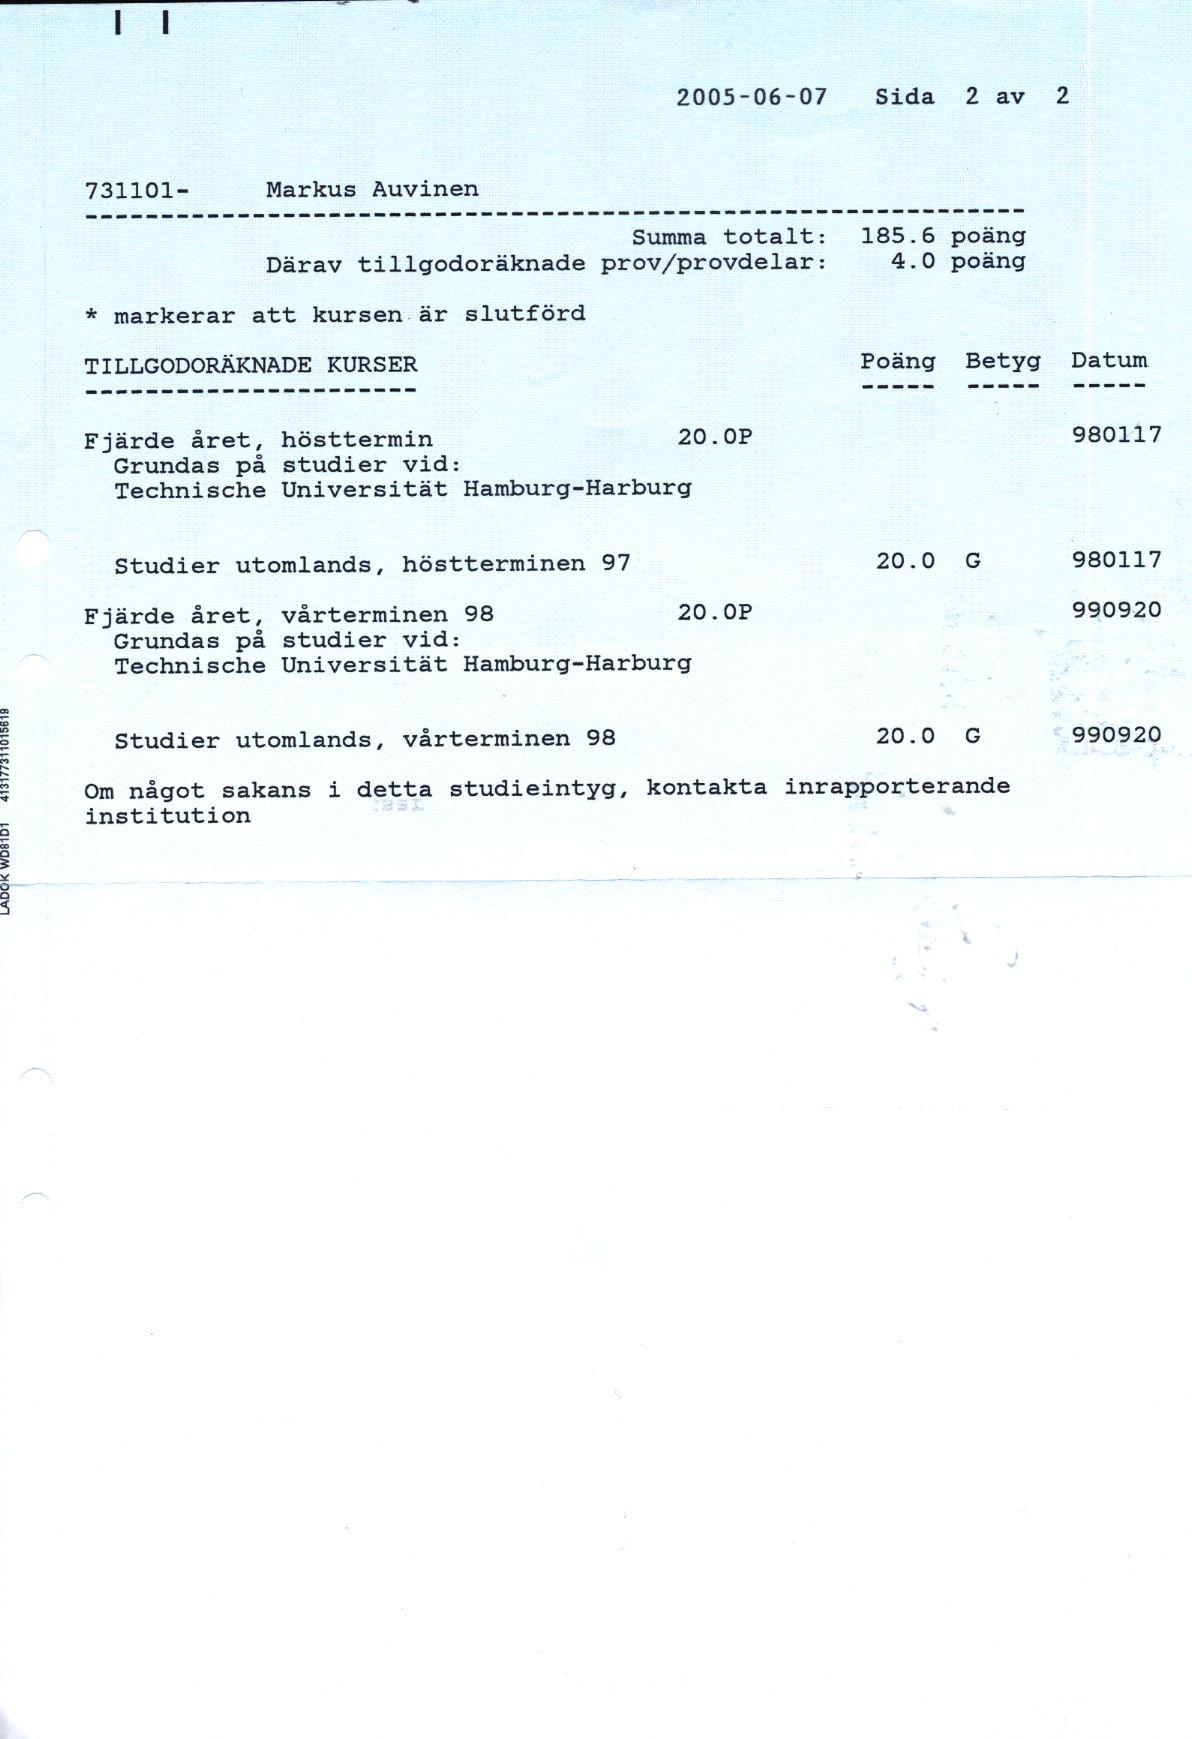 Chalmers grades (page 2, jpg)